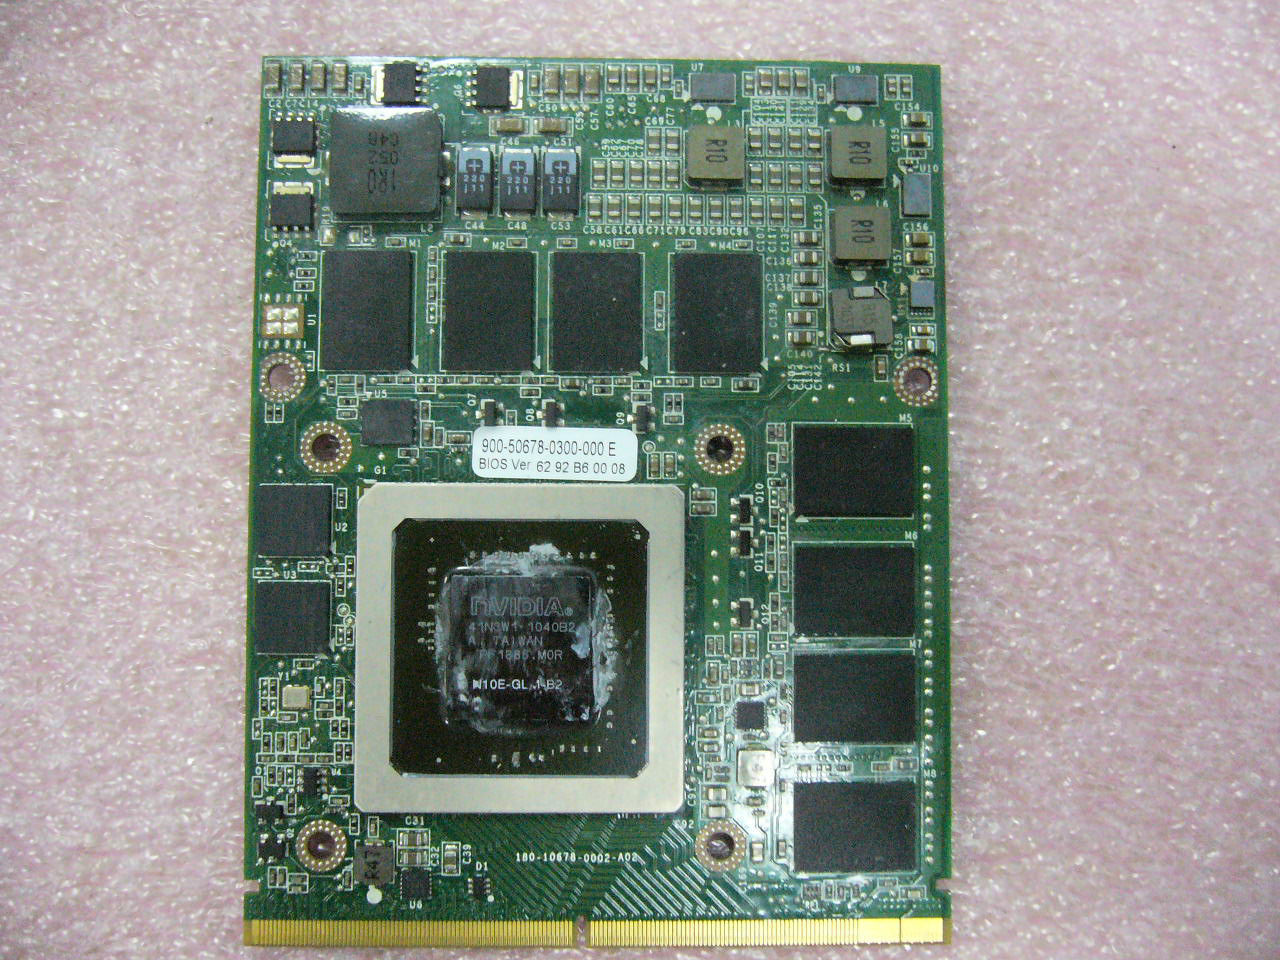 QTY 1x Nvidia Quadro FX2800M N10E-GLM 1GB Mem MXM Video Card